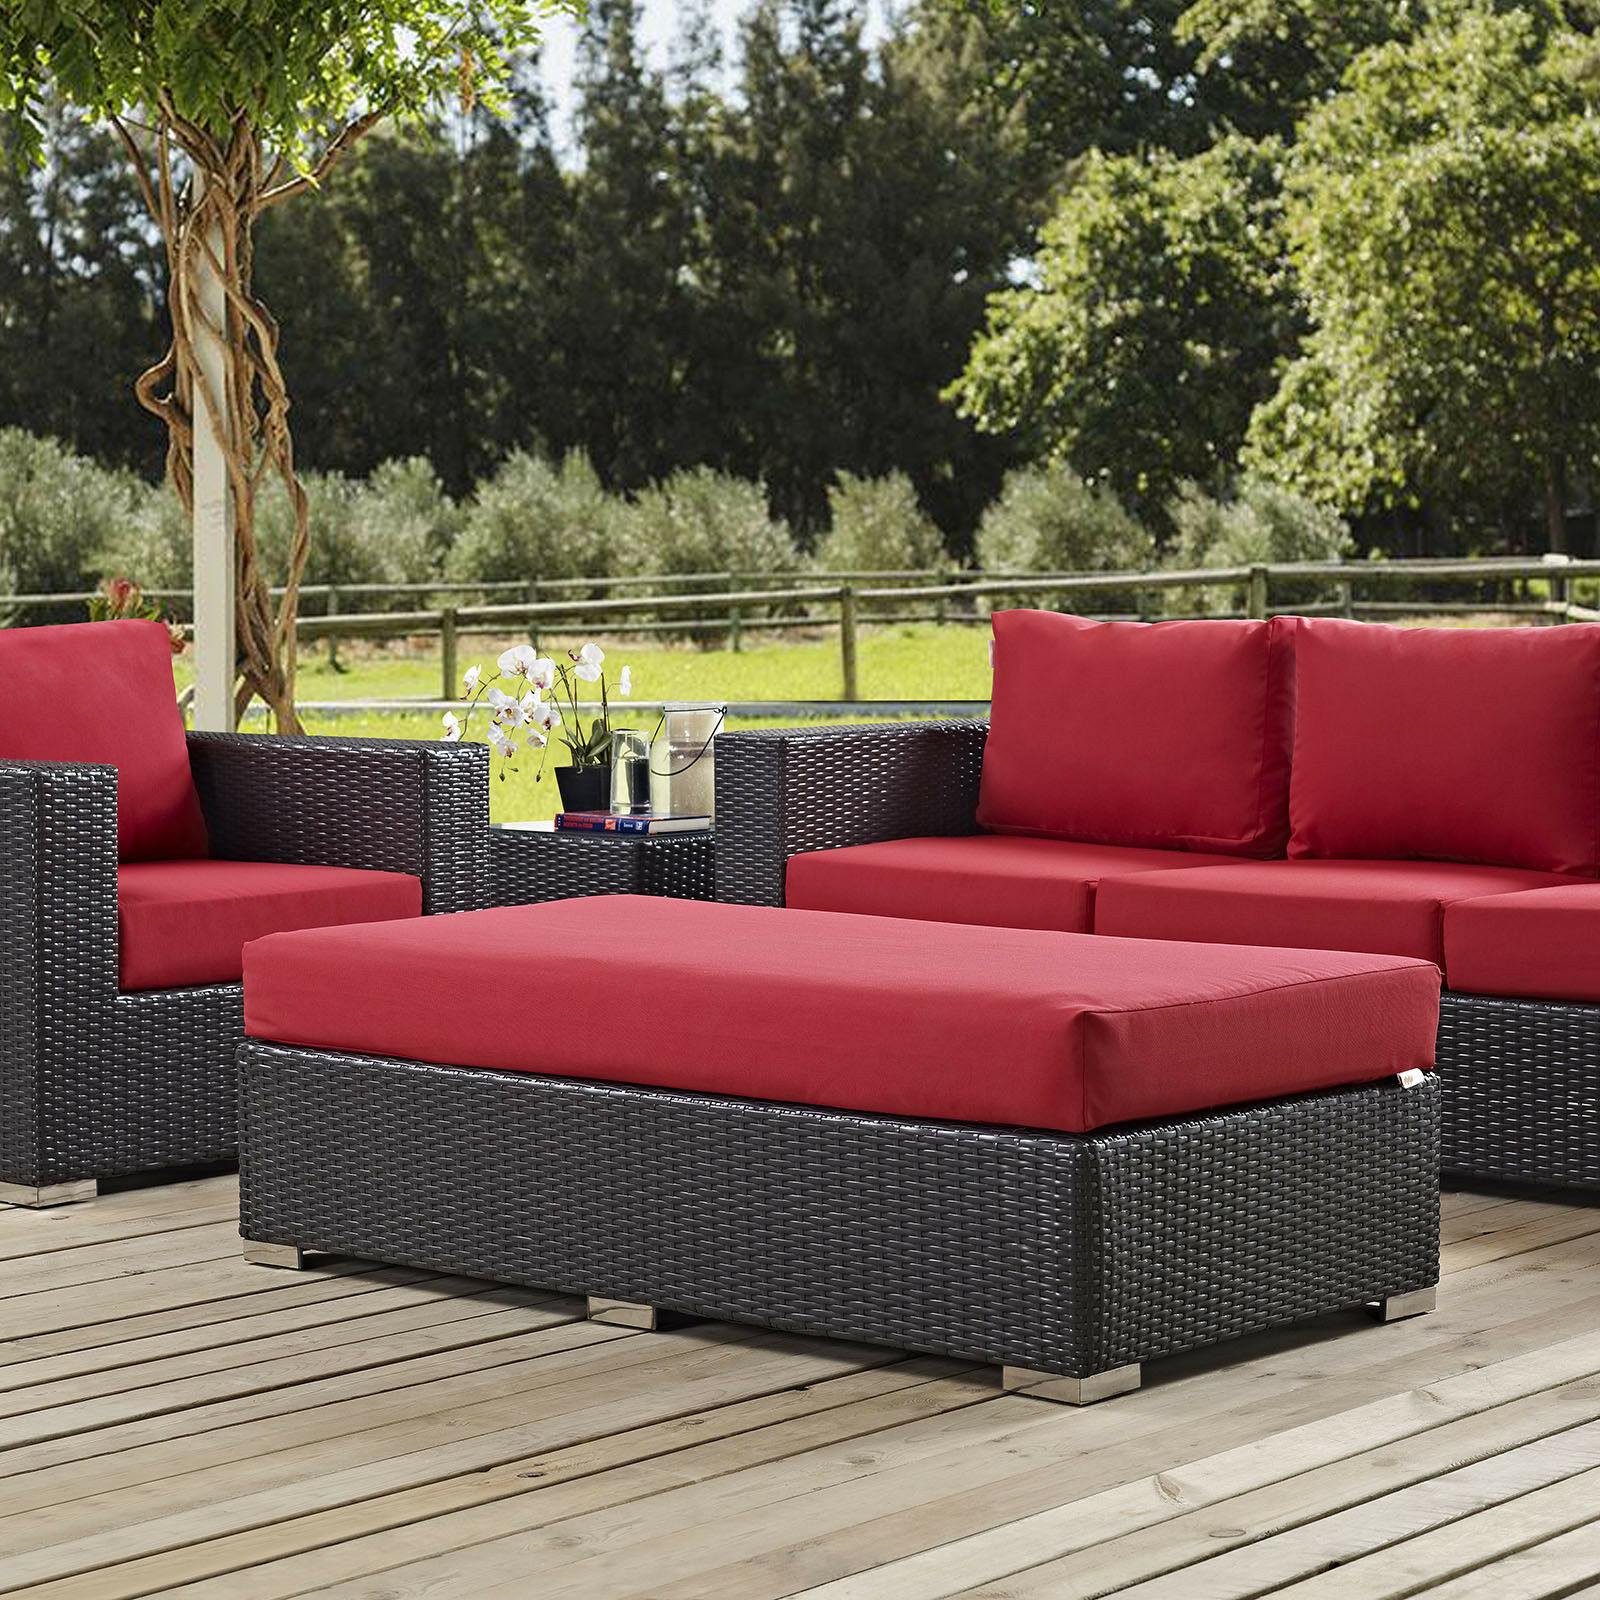 Details About Outdoor Patio Furniture Wicker Rattan Rectangle Ottoman In Espresso Red regarding measurements 1600 X 1600